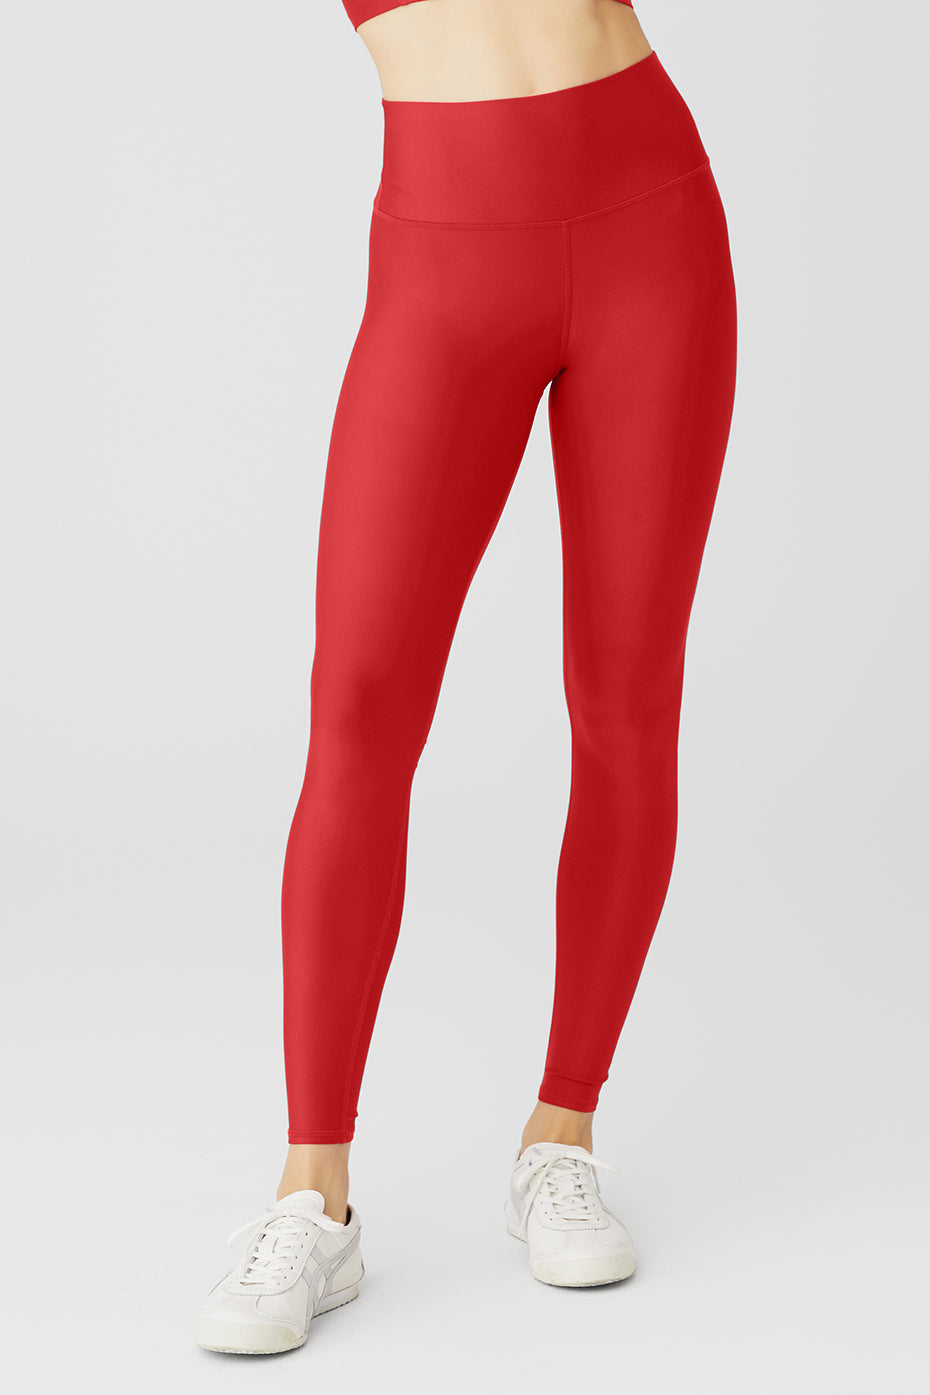 Women Solid Color Yoga Pants | Soft Athletic Legging Women | High Yoga  Leggings - Solid - Aliexpress